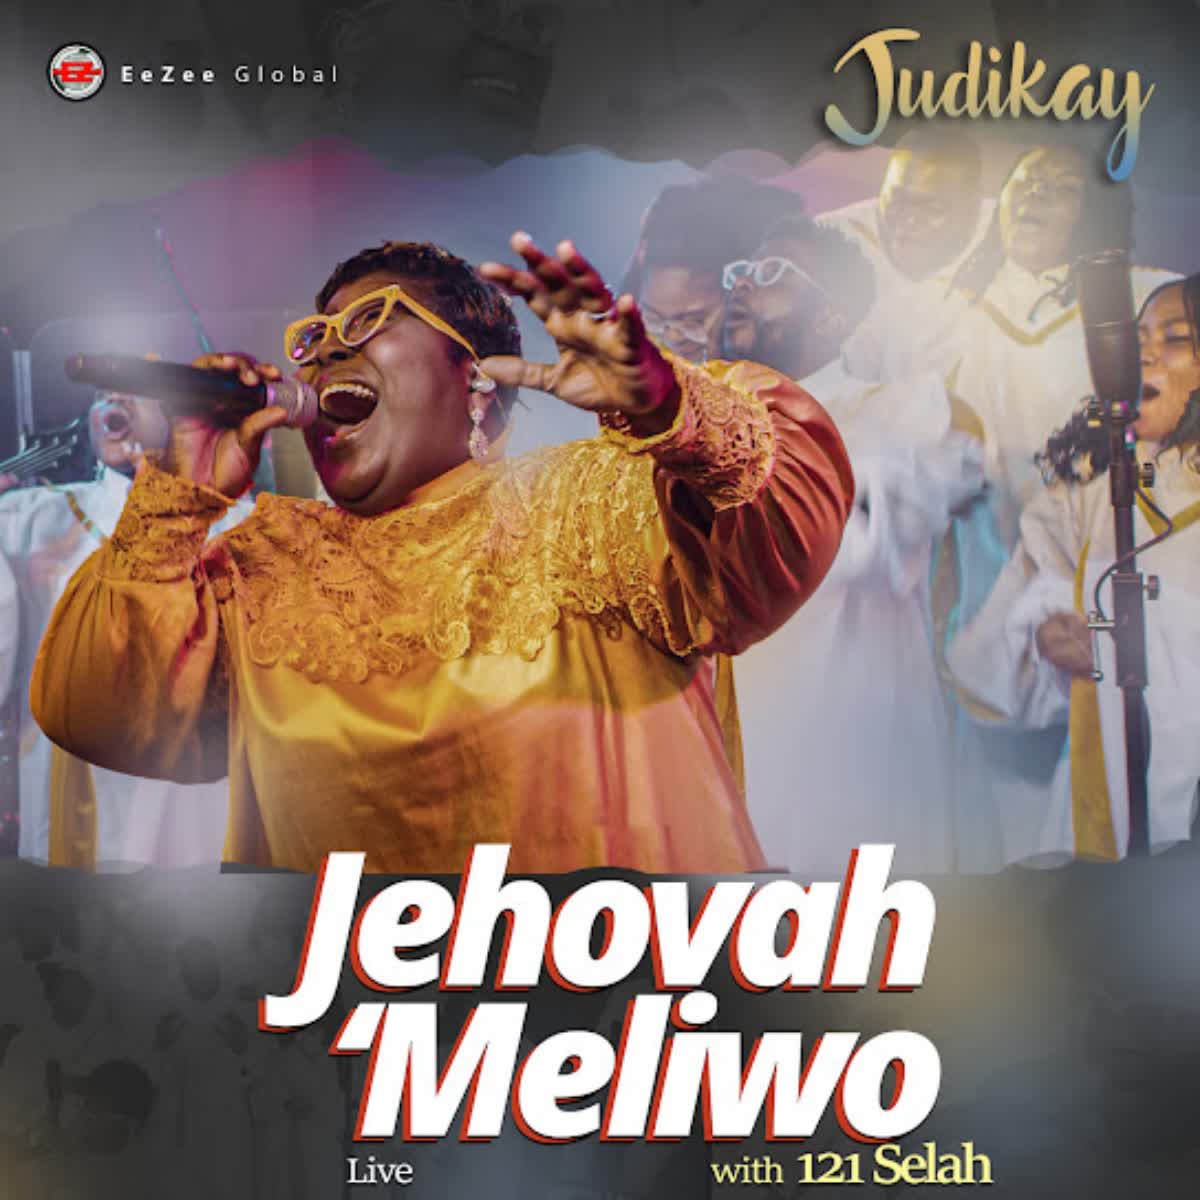 Judikay Jehovah Meliwo Live